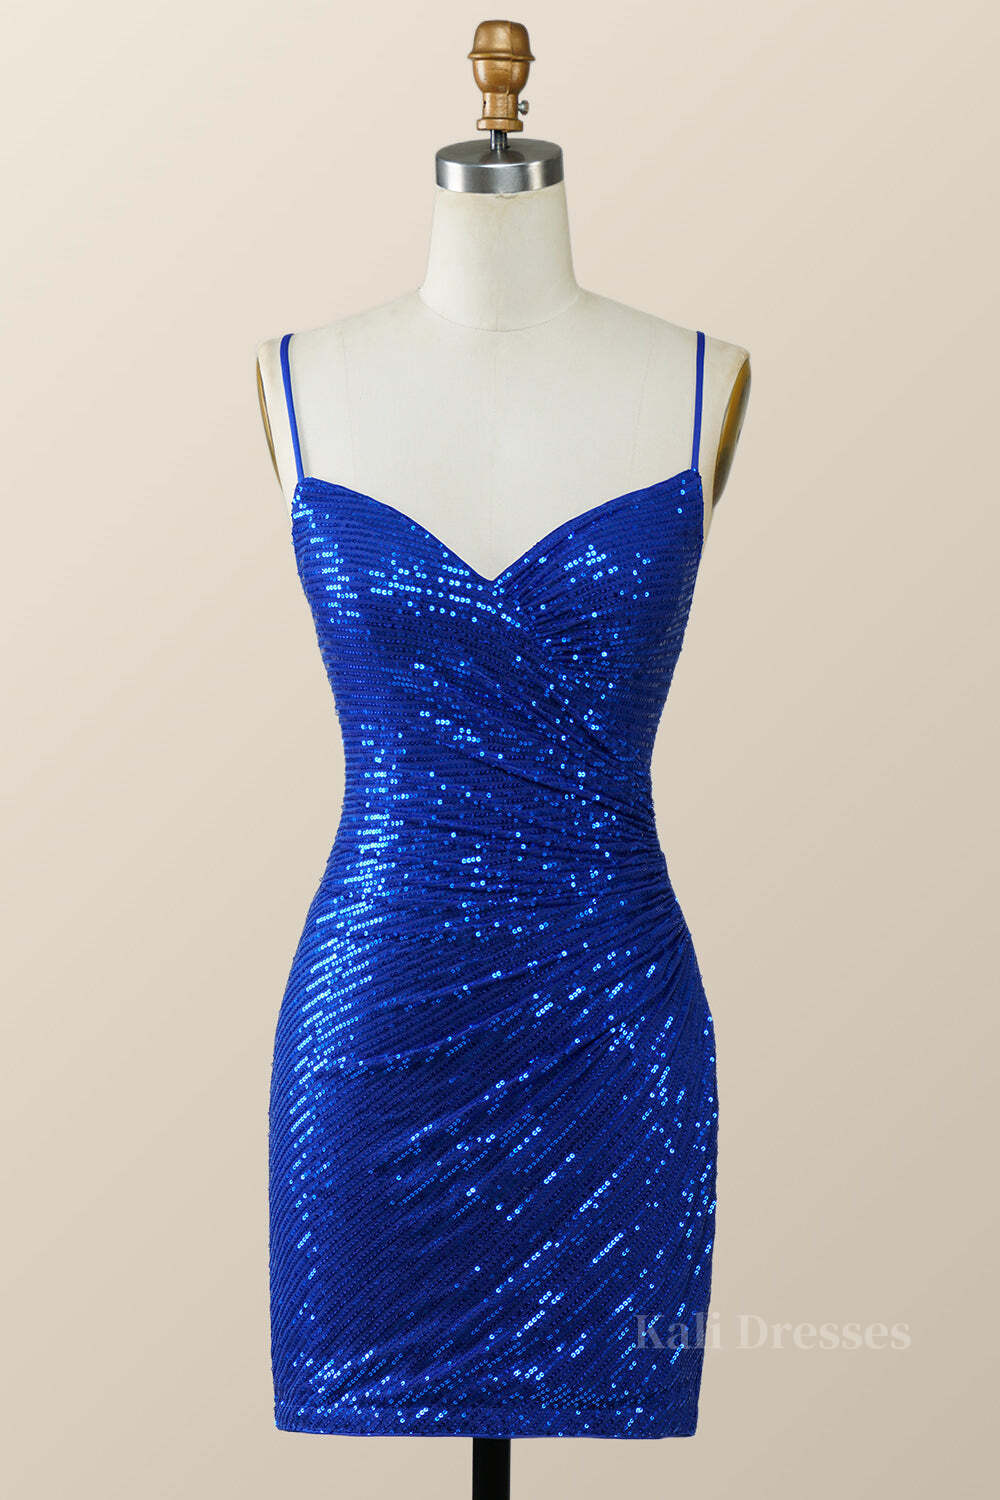 Straps Royal Blue Sequin Tight Mini Dress